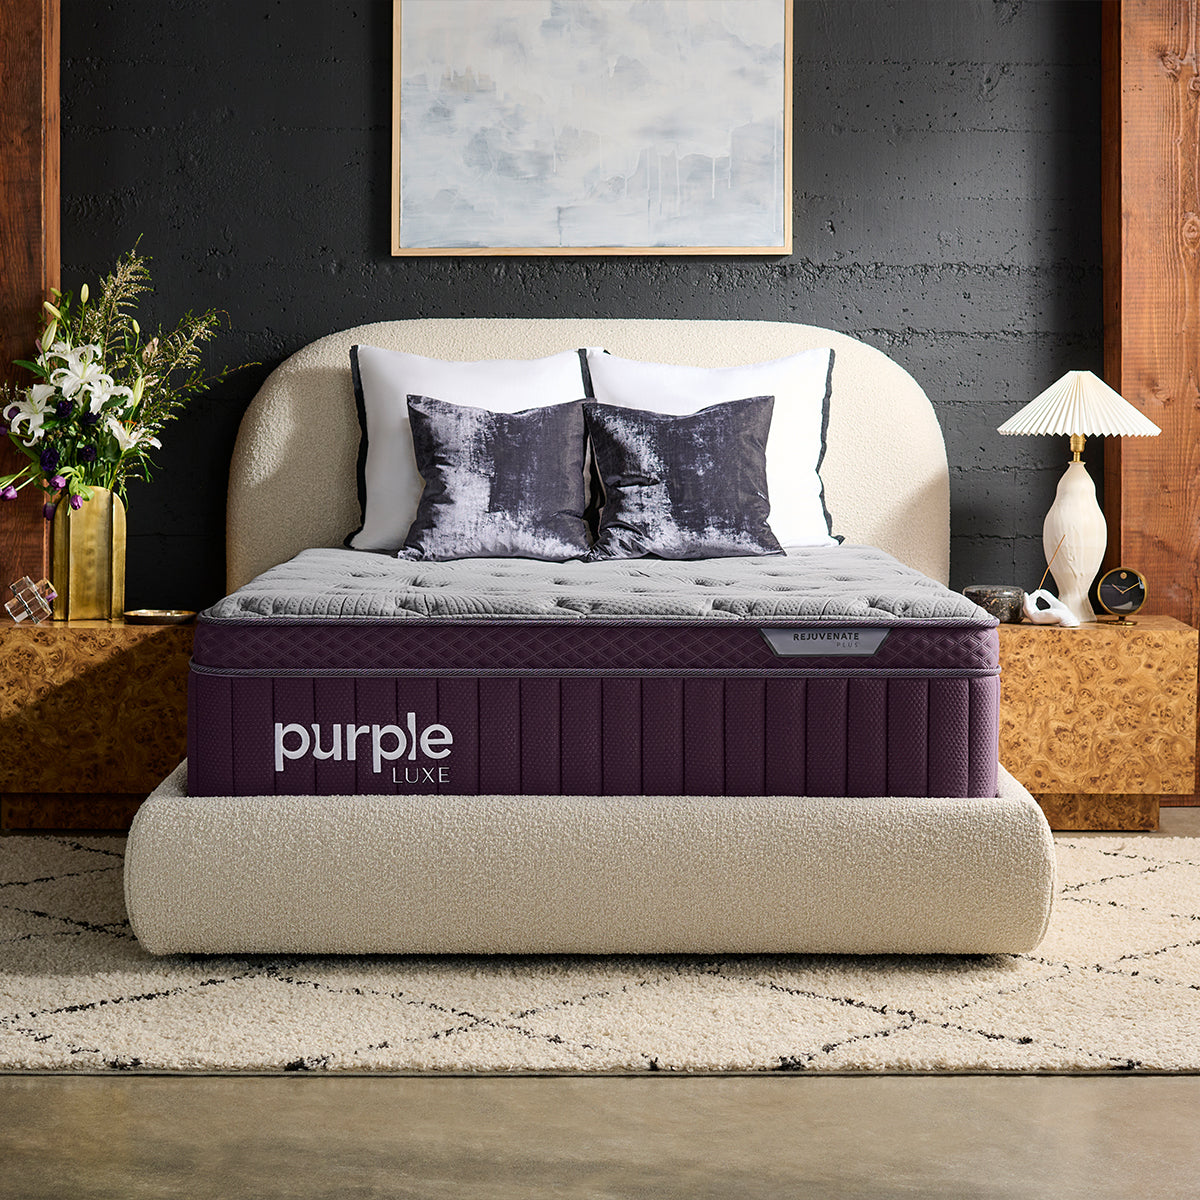 Purple Rejuvenate Plus Mattress In Bedroom